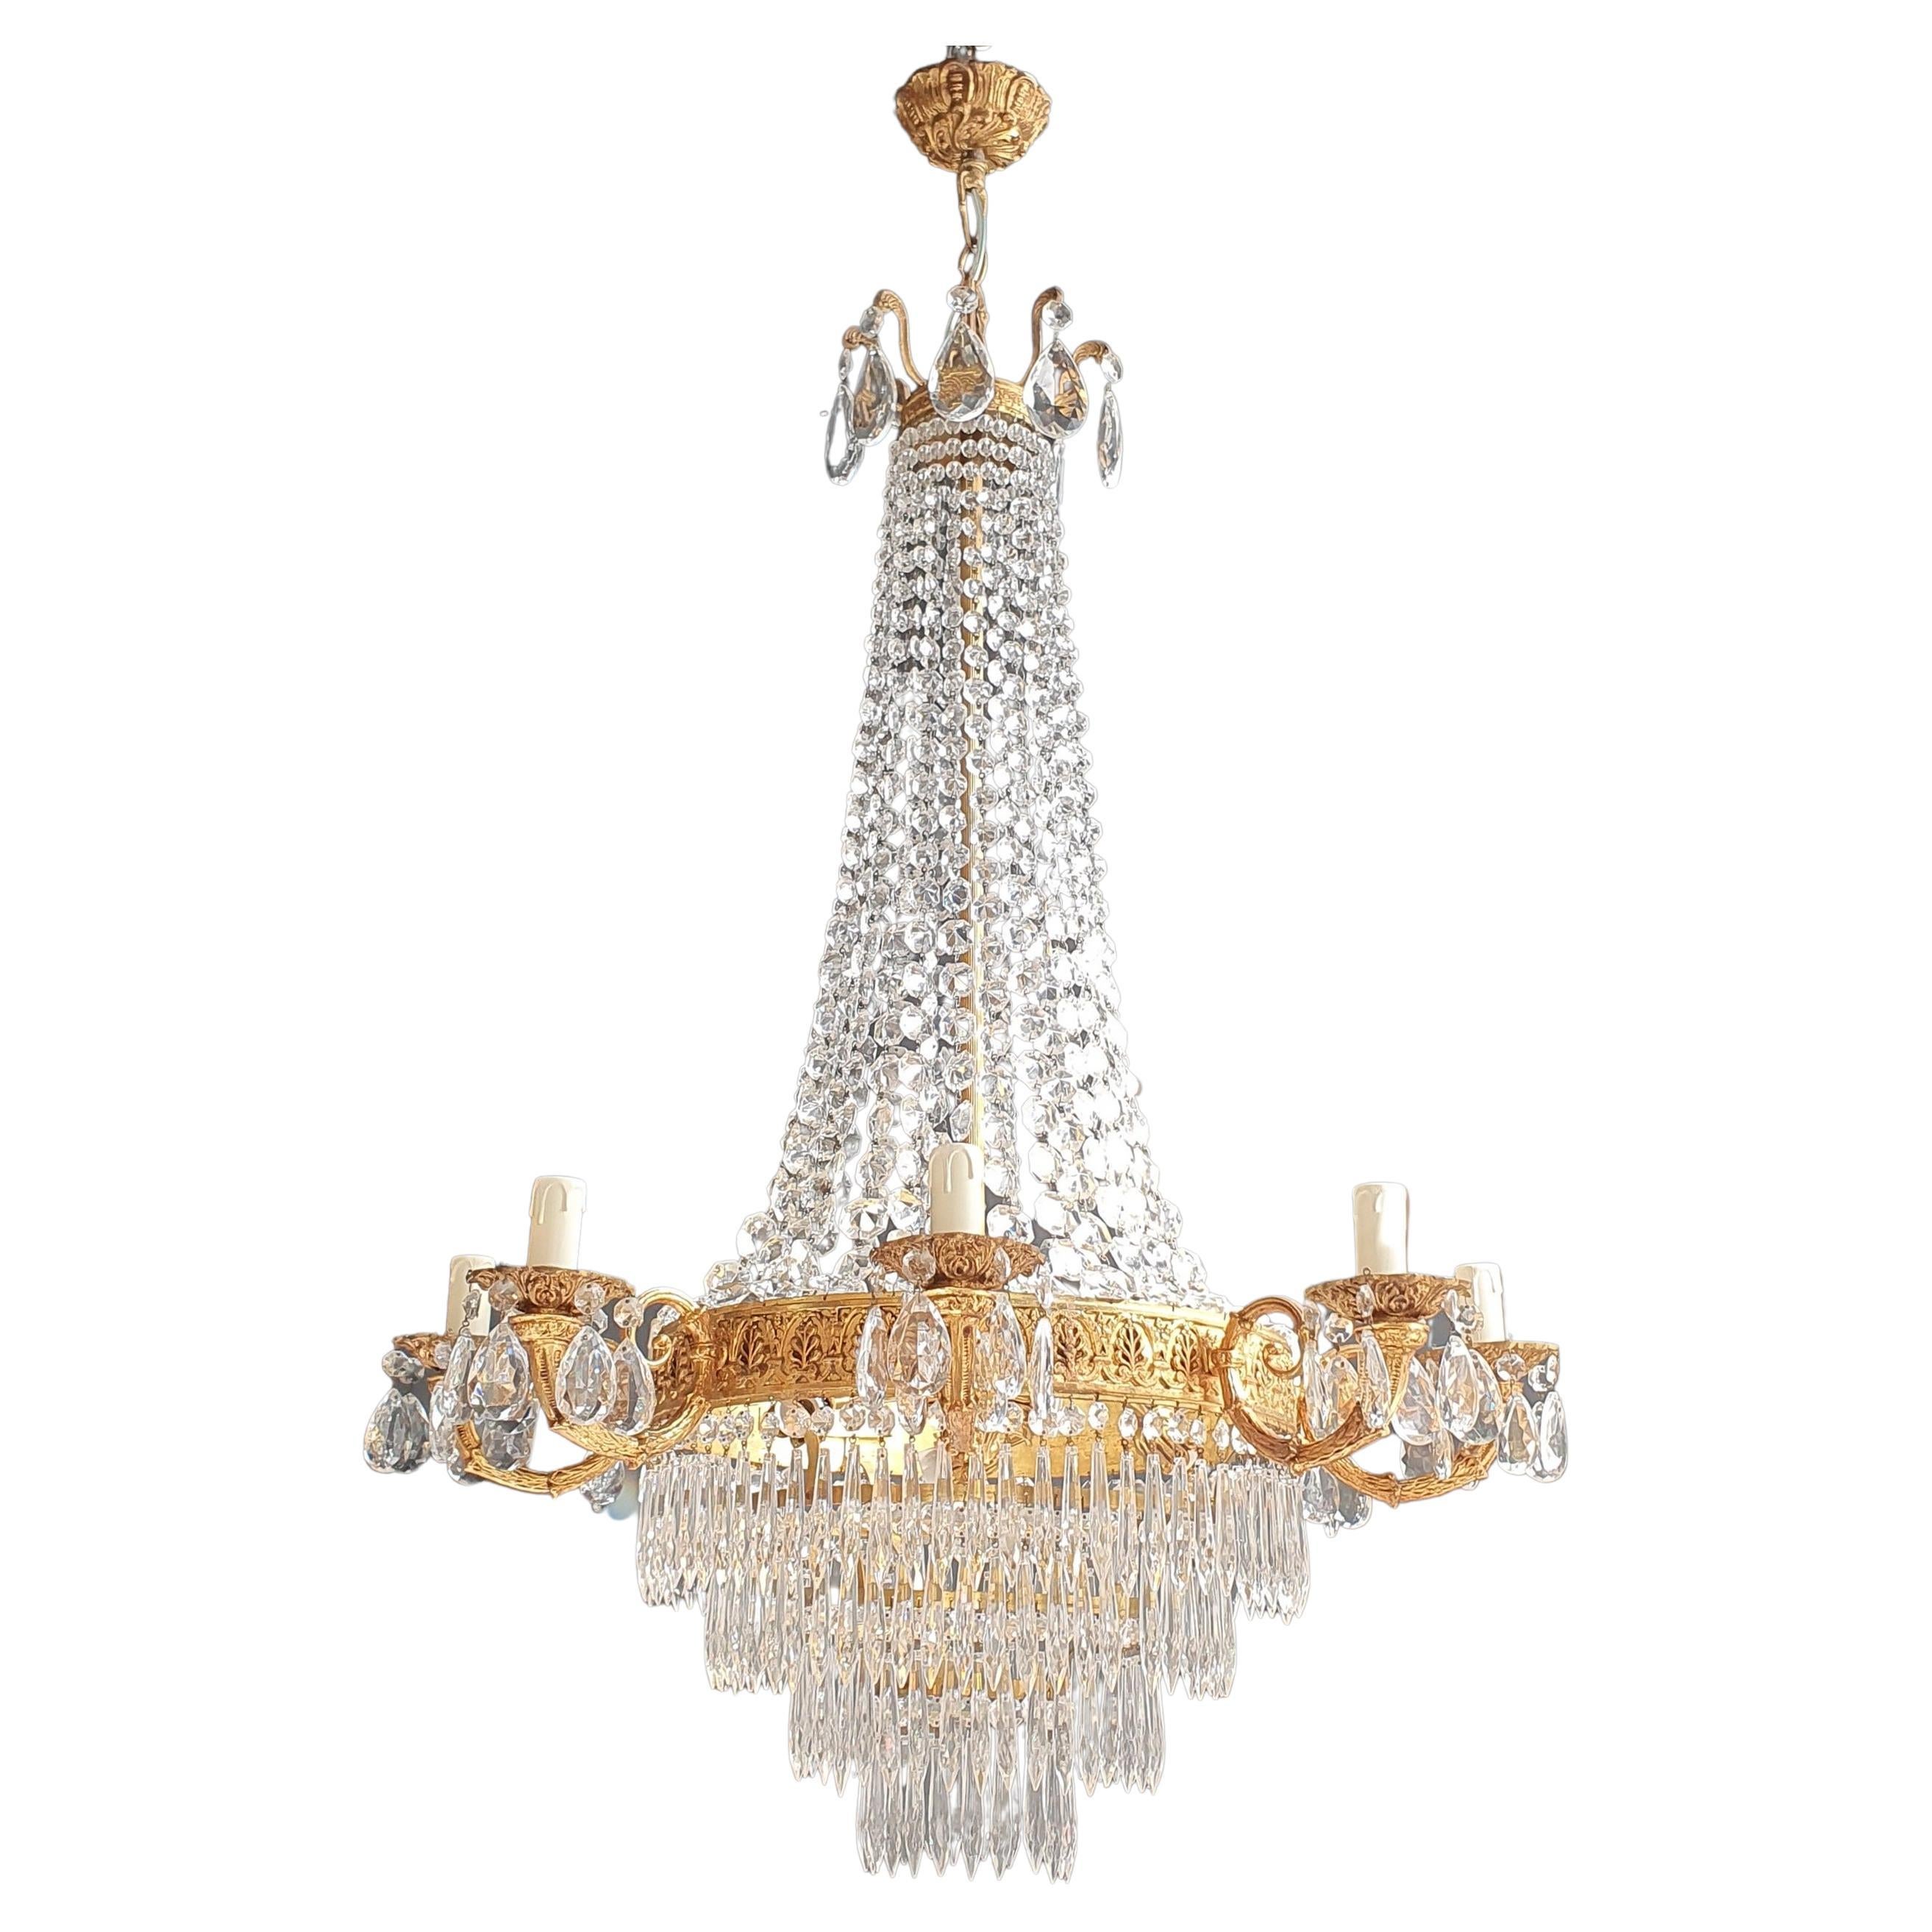 Empire Brass Chandelier Crystal Lustre Ceiling Light Antique Gold